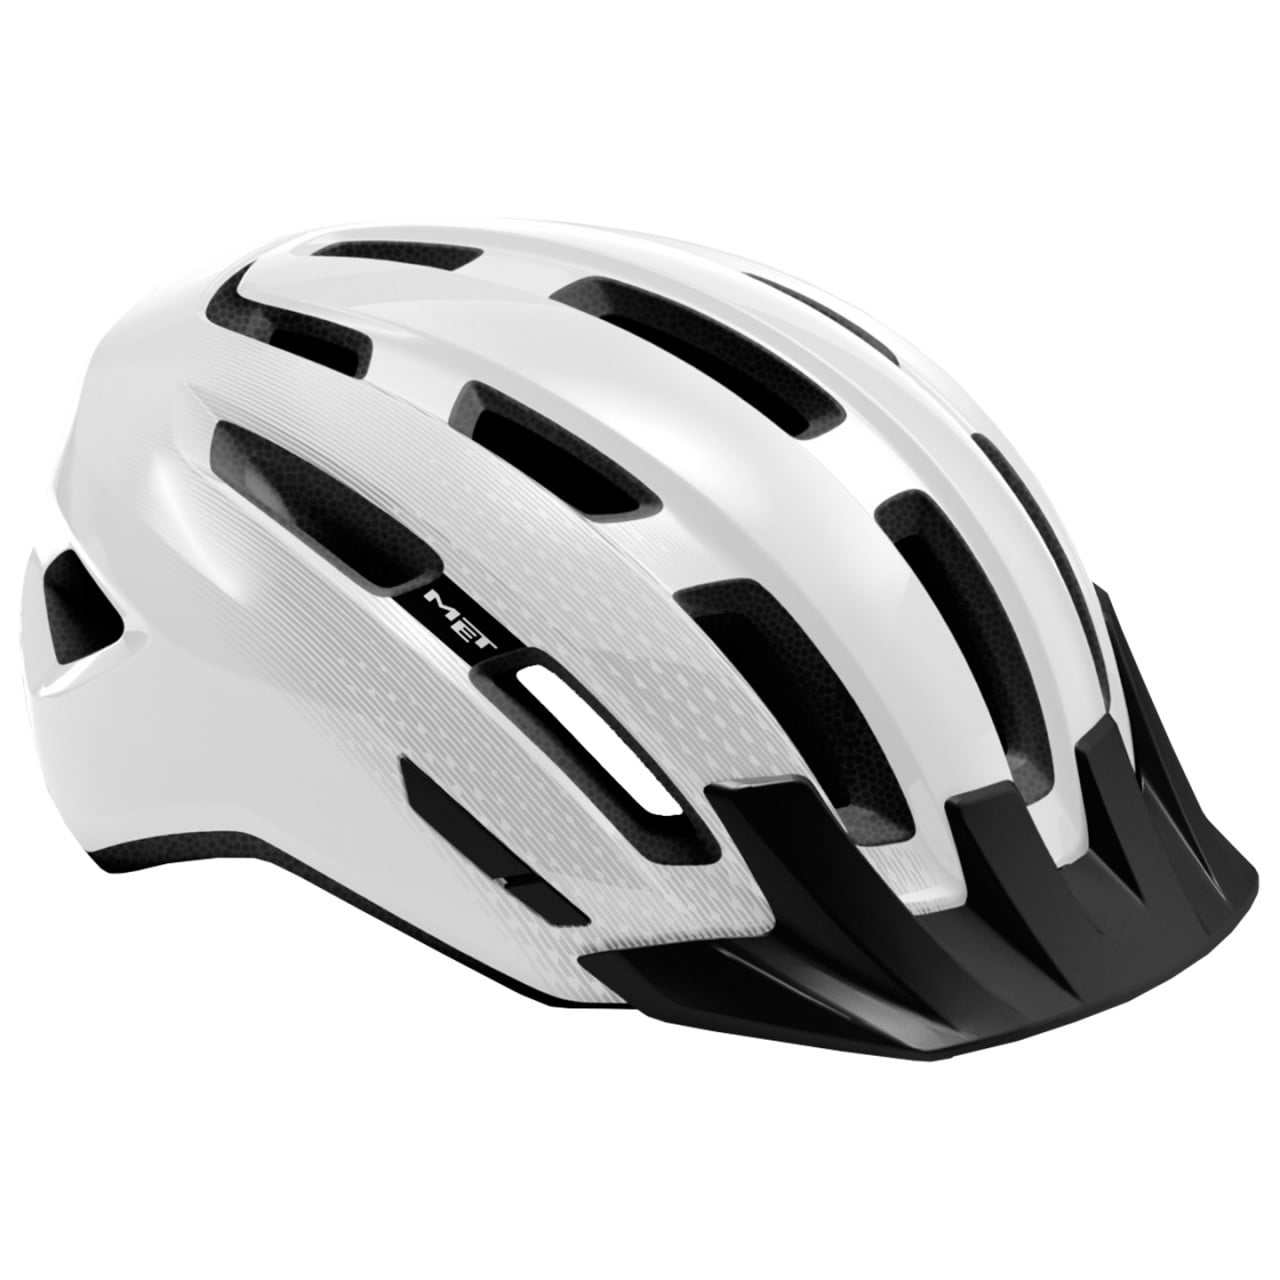 Downtown Mips Cycling Helmet